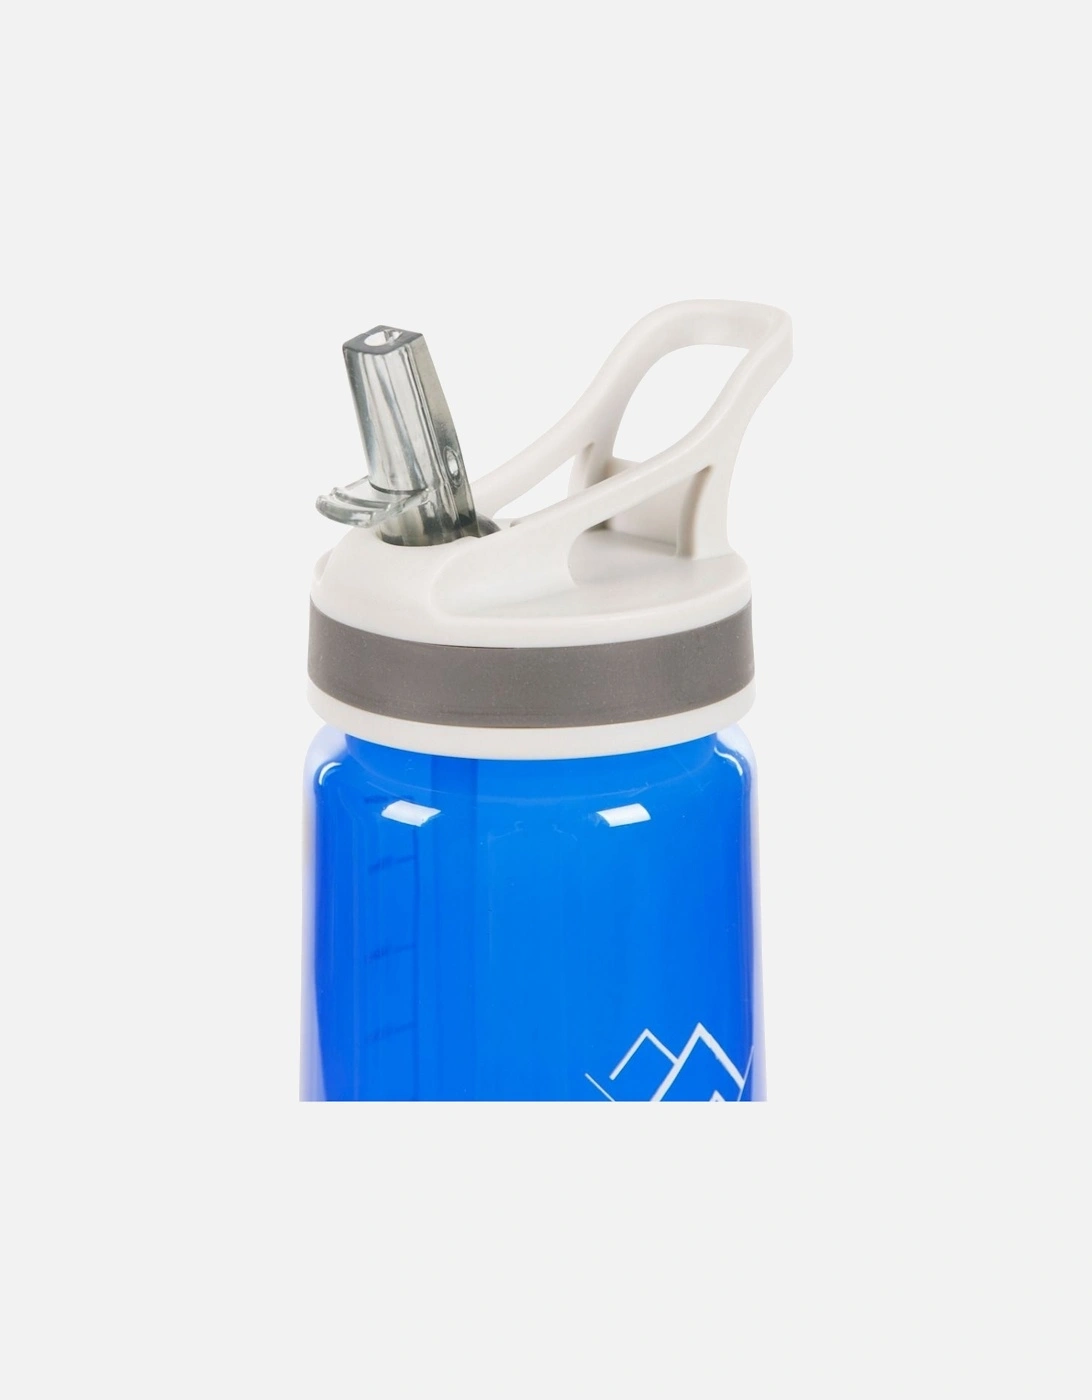 Vatura Tritan Sports Cap Water Bottle